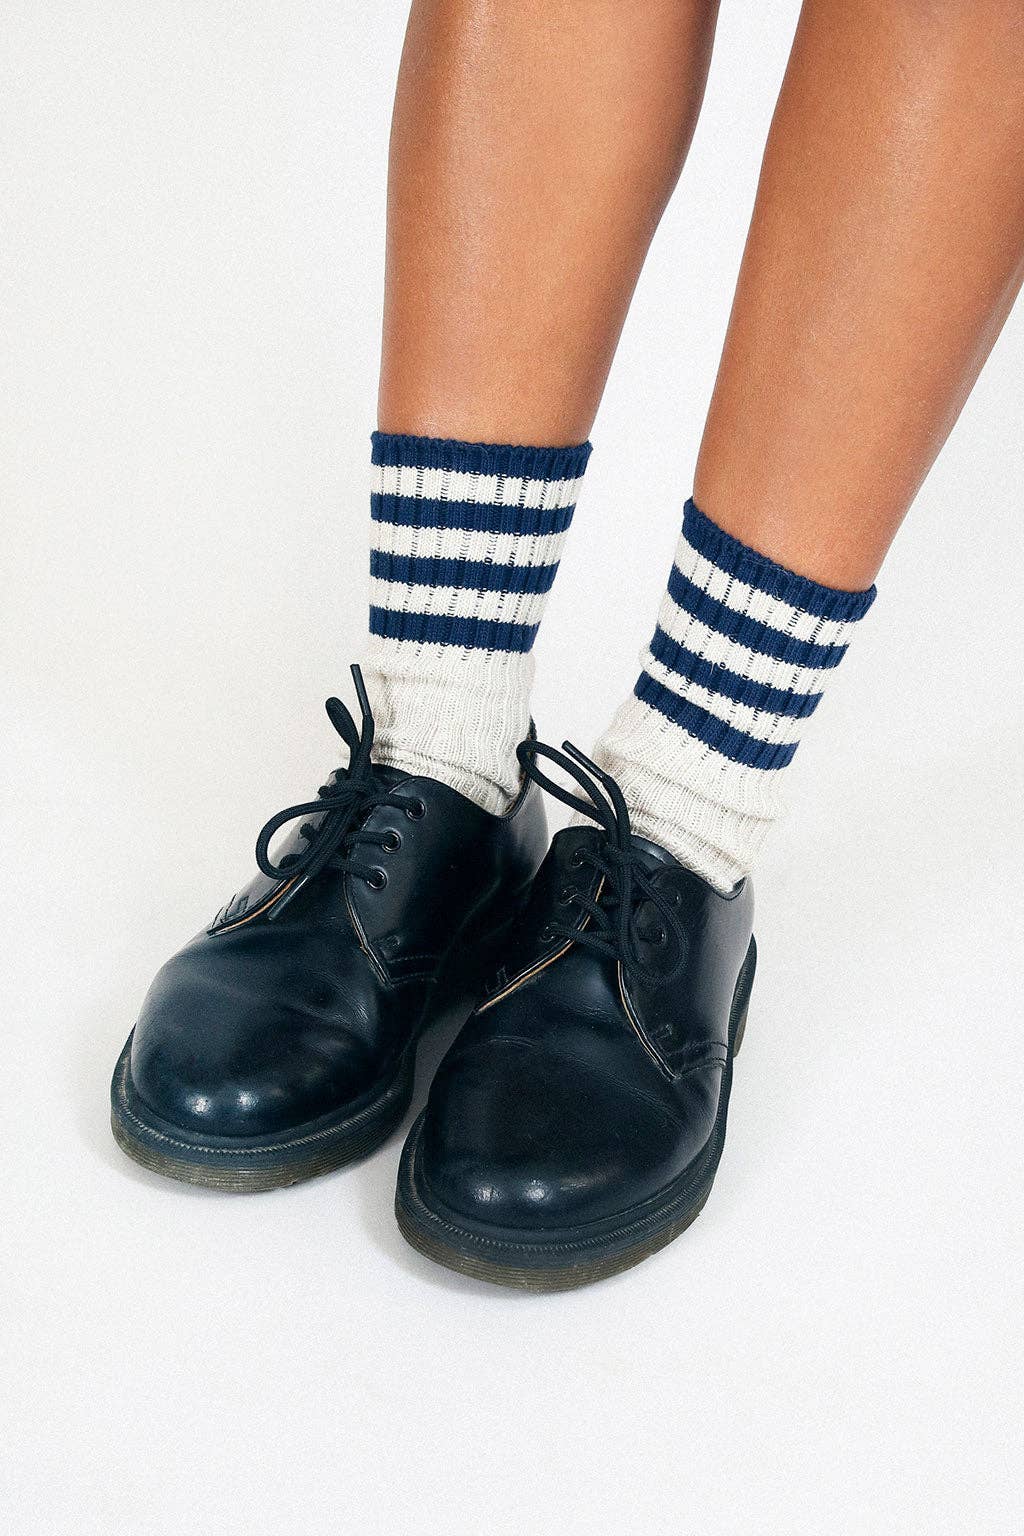 Tailored Union - socks